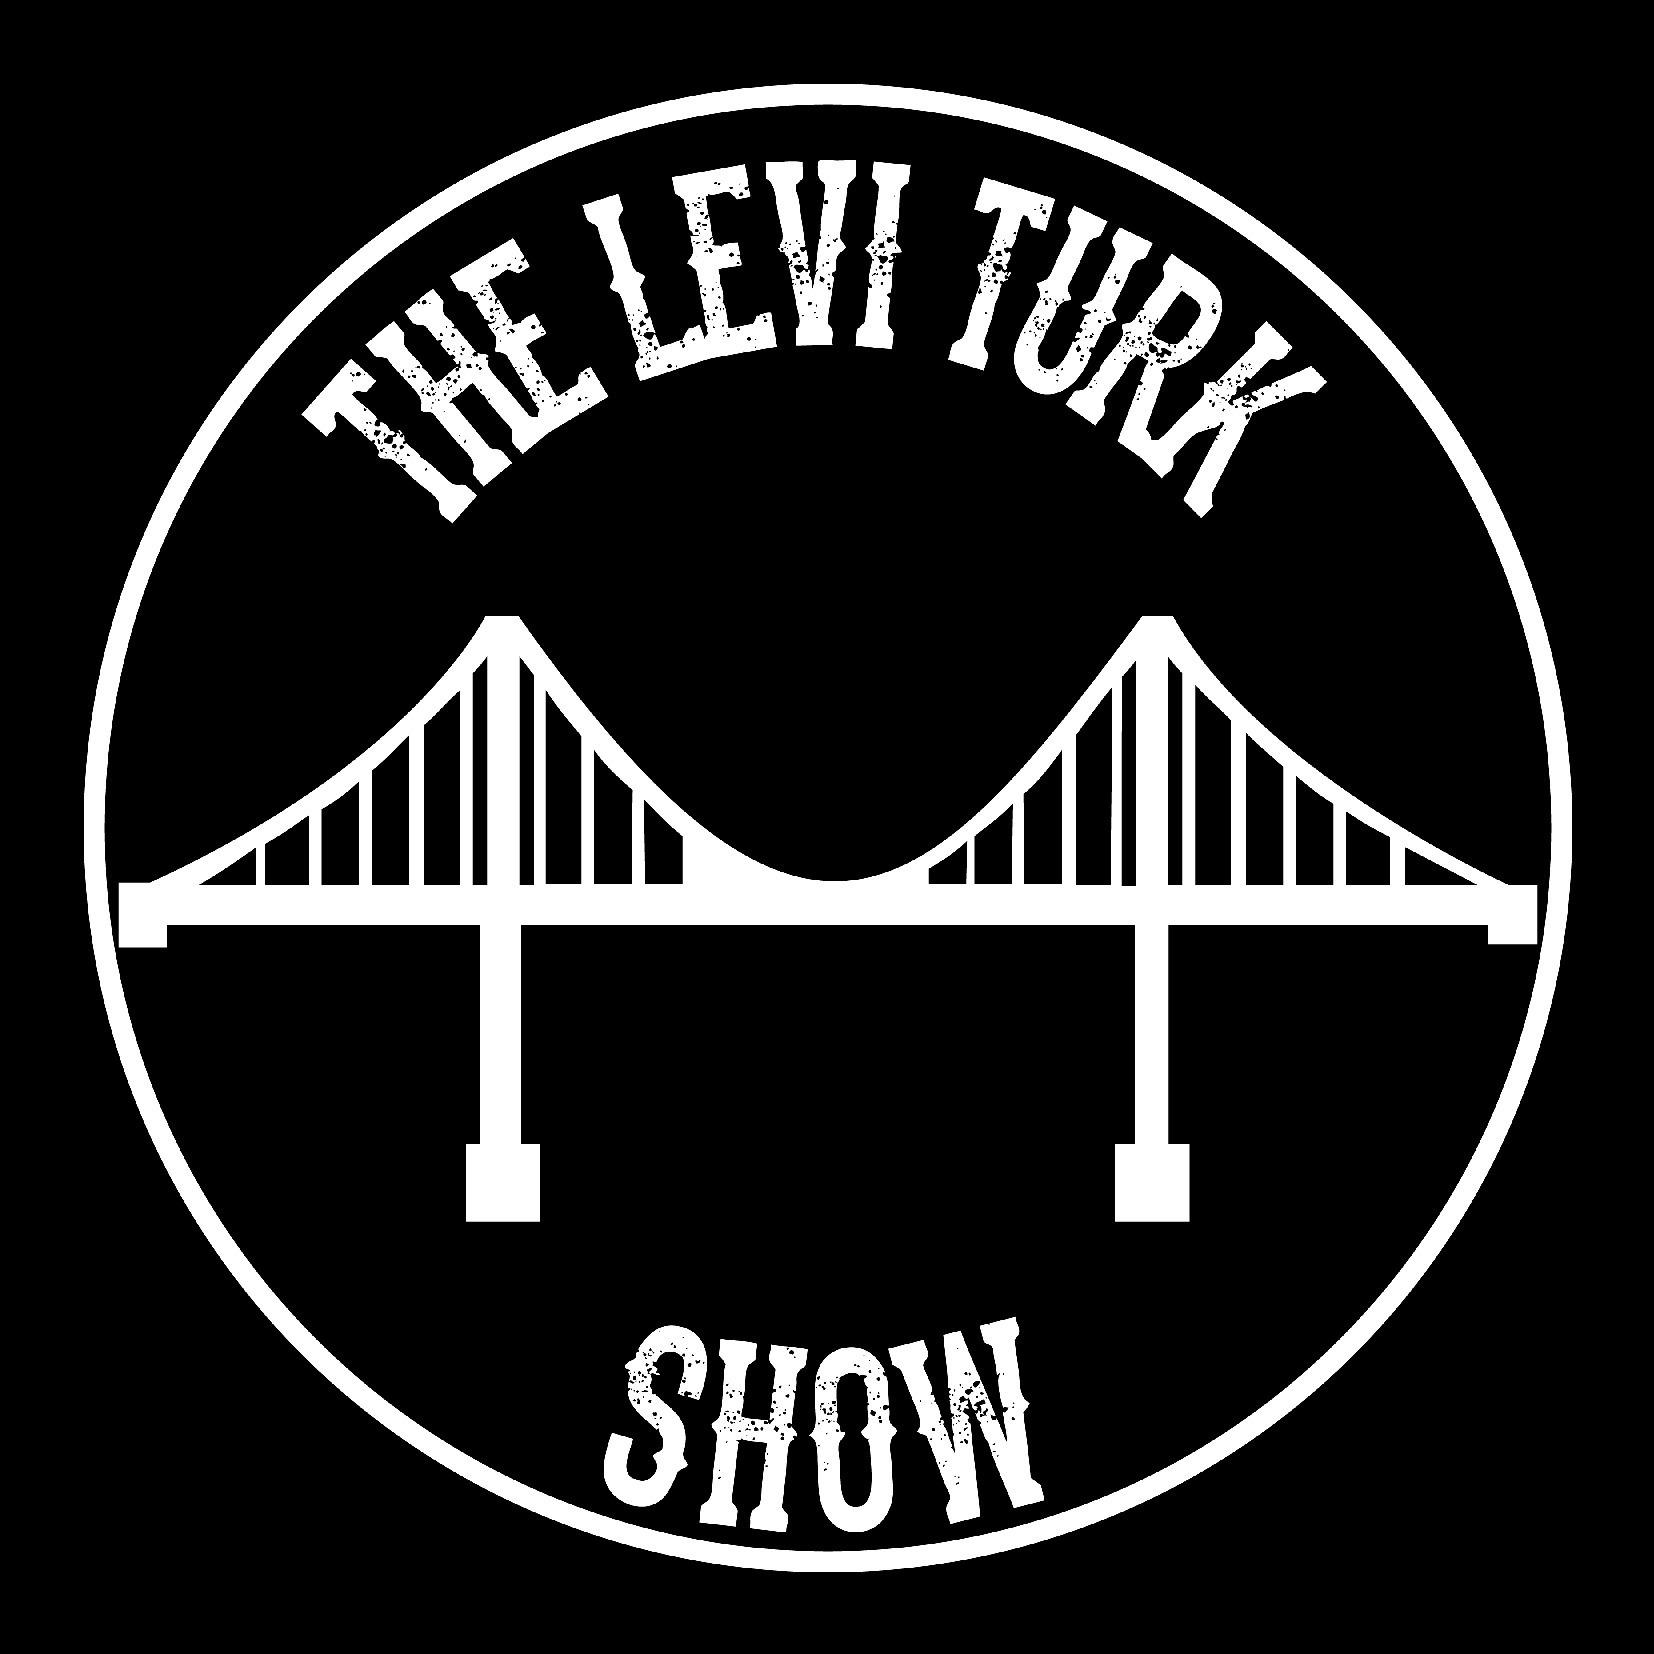 The Levi Turk Show